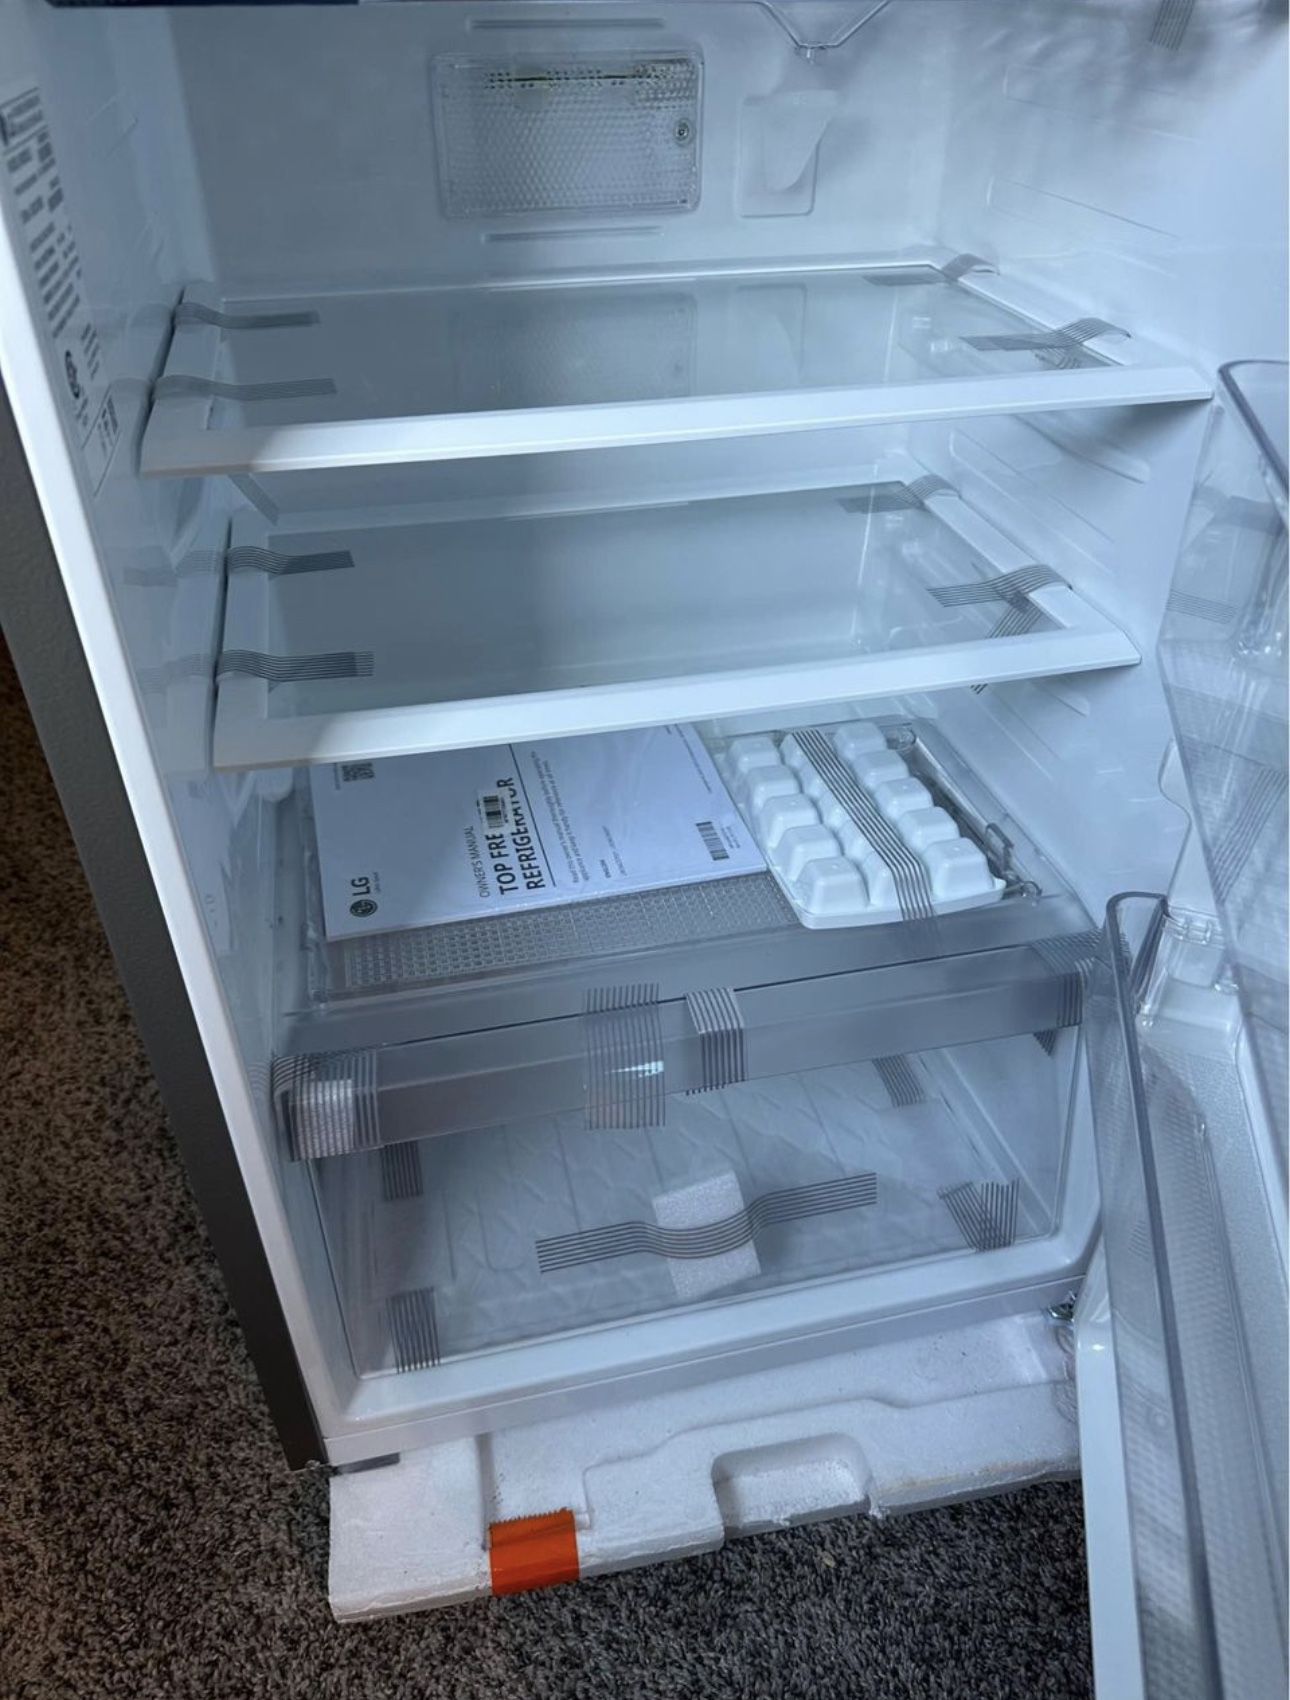 LG - 5.79 Cu. Ft. Top-Freezer Refrigerator with Semi Auto Defrost - BRAND NEW!